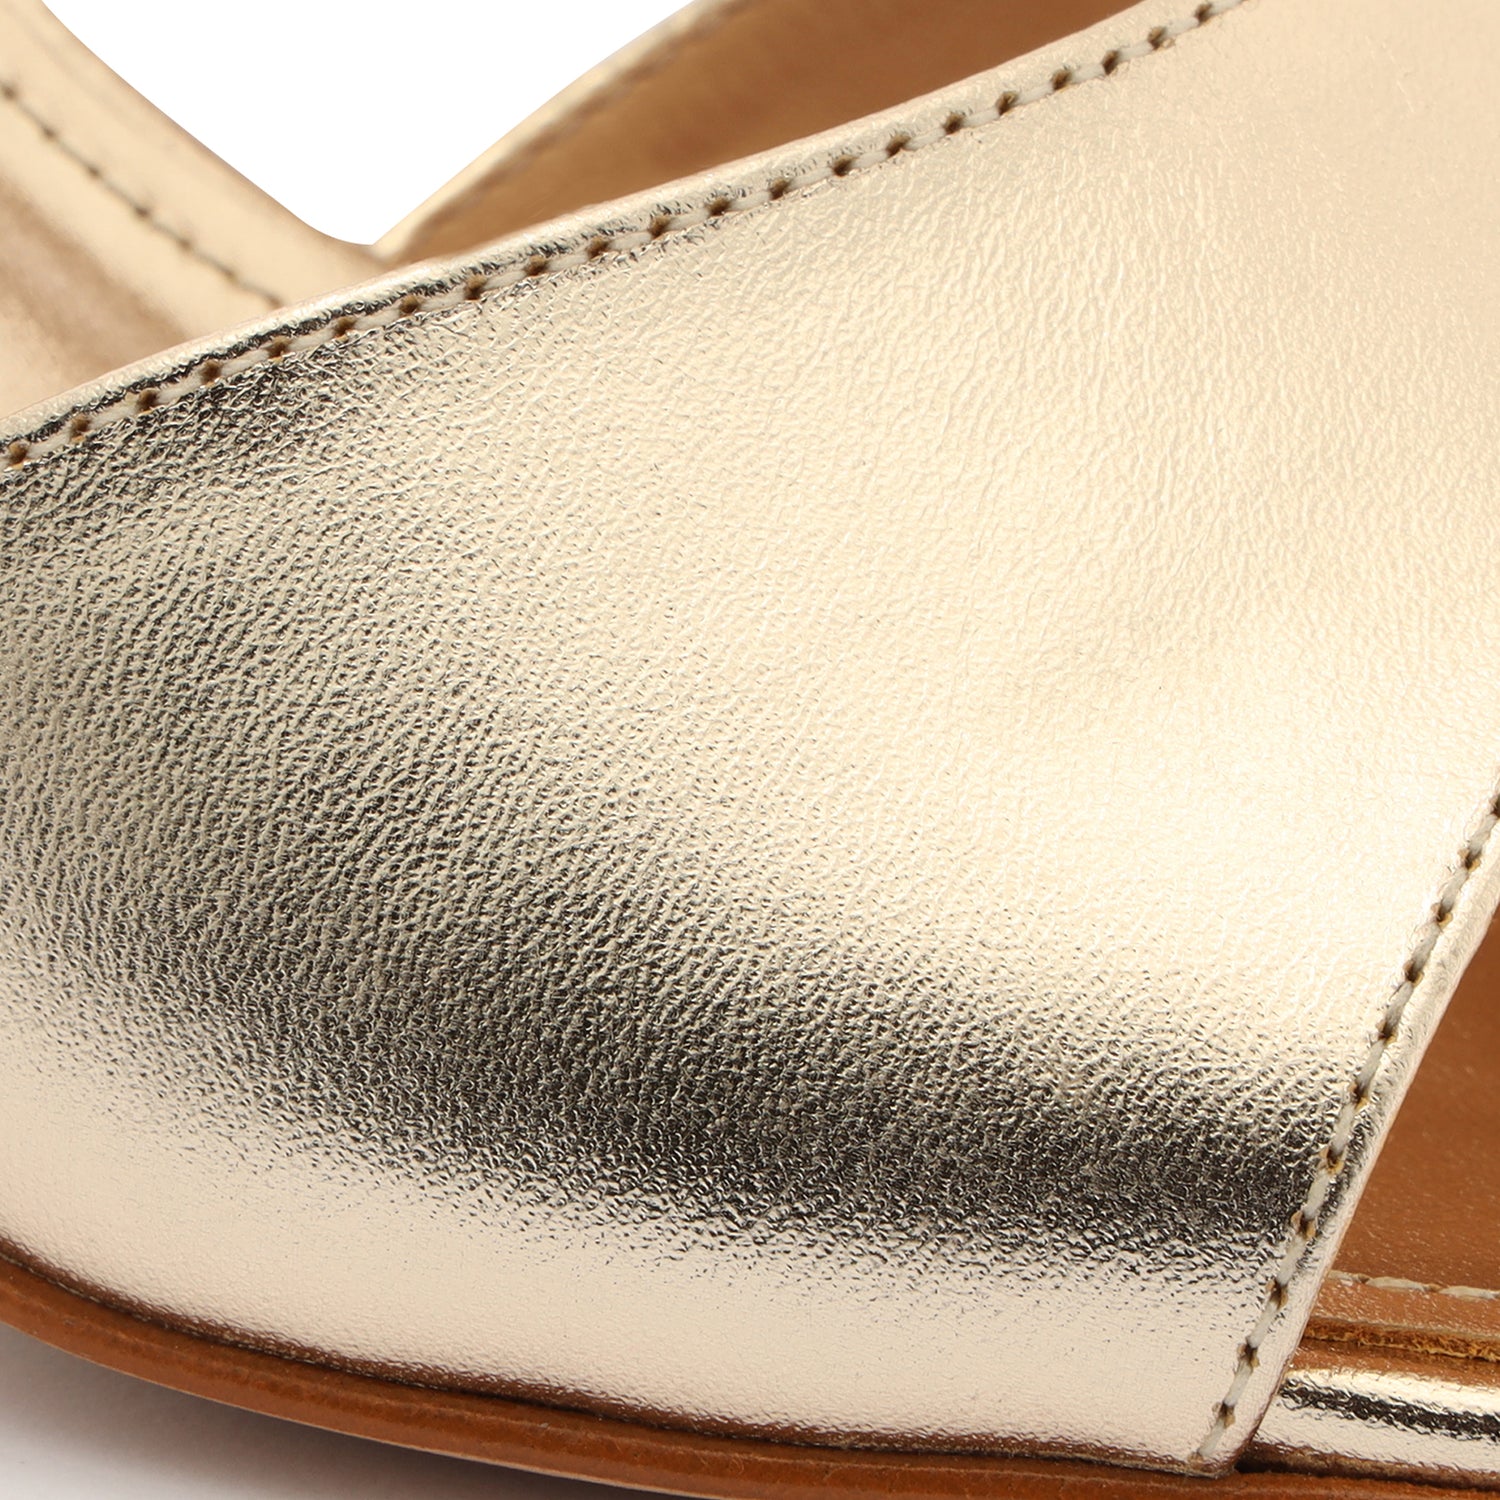 Posseni Metallic Leather Sandal Sandals Sale    - Schutz Shoes